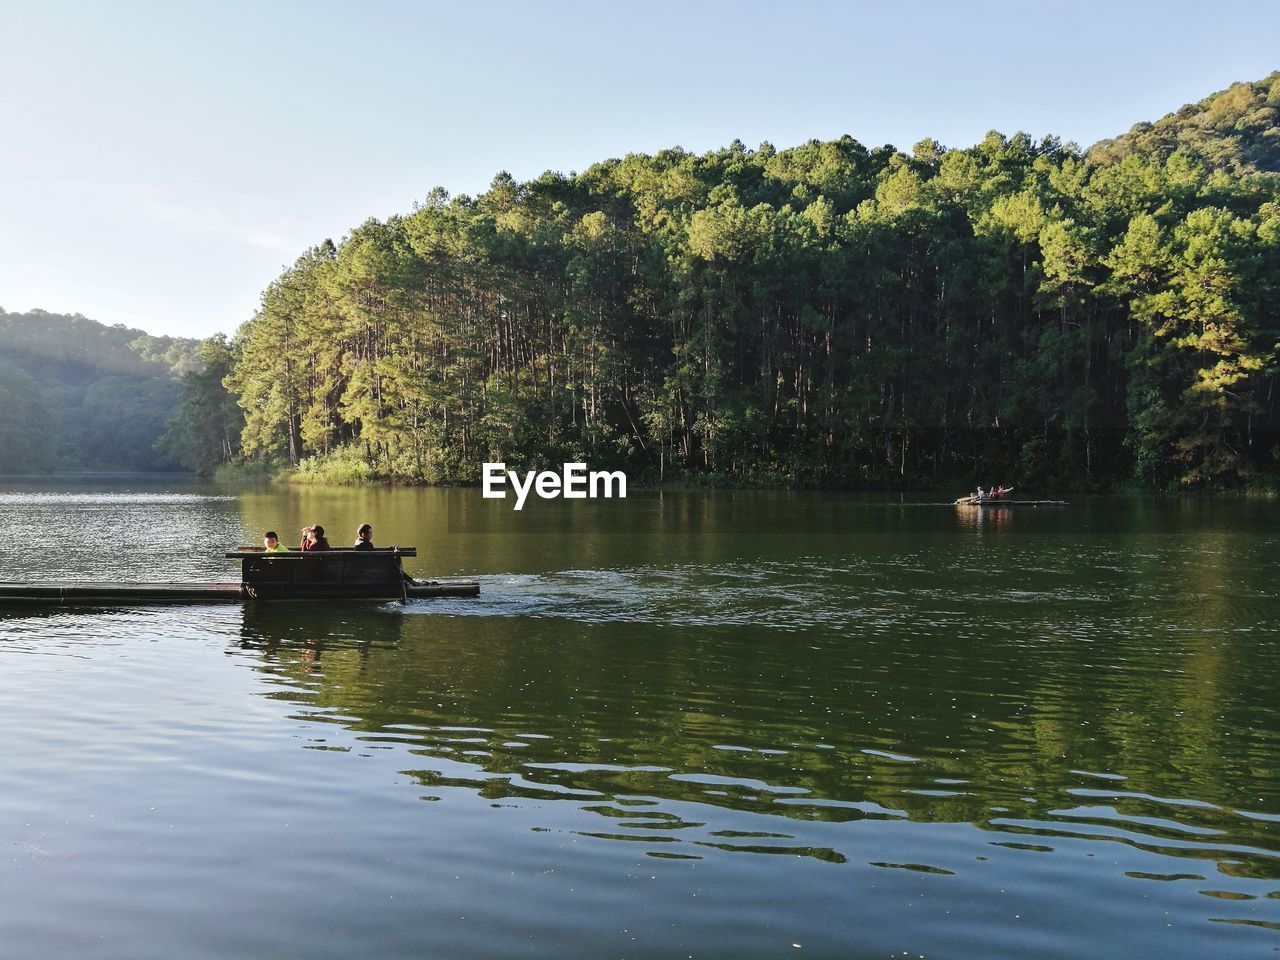 People on wooden raft in lake against trees